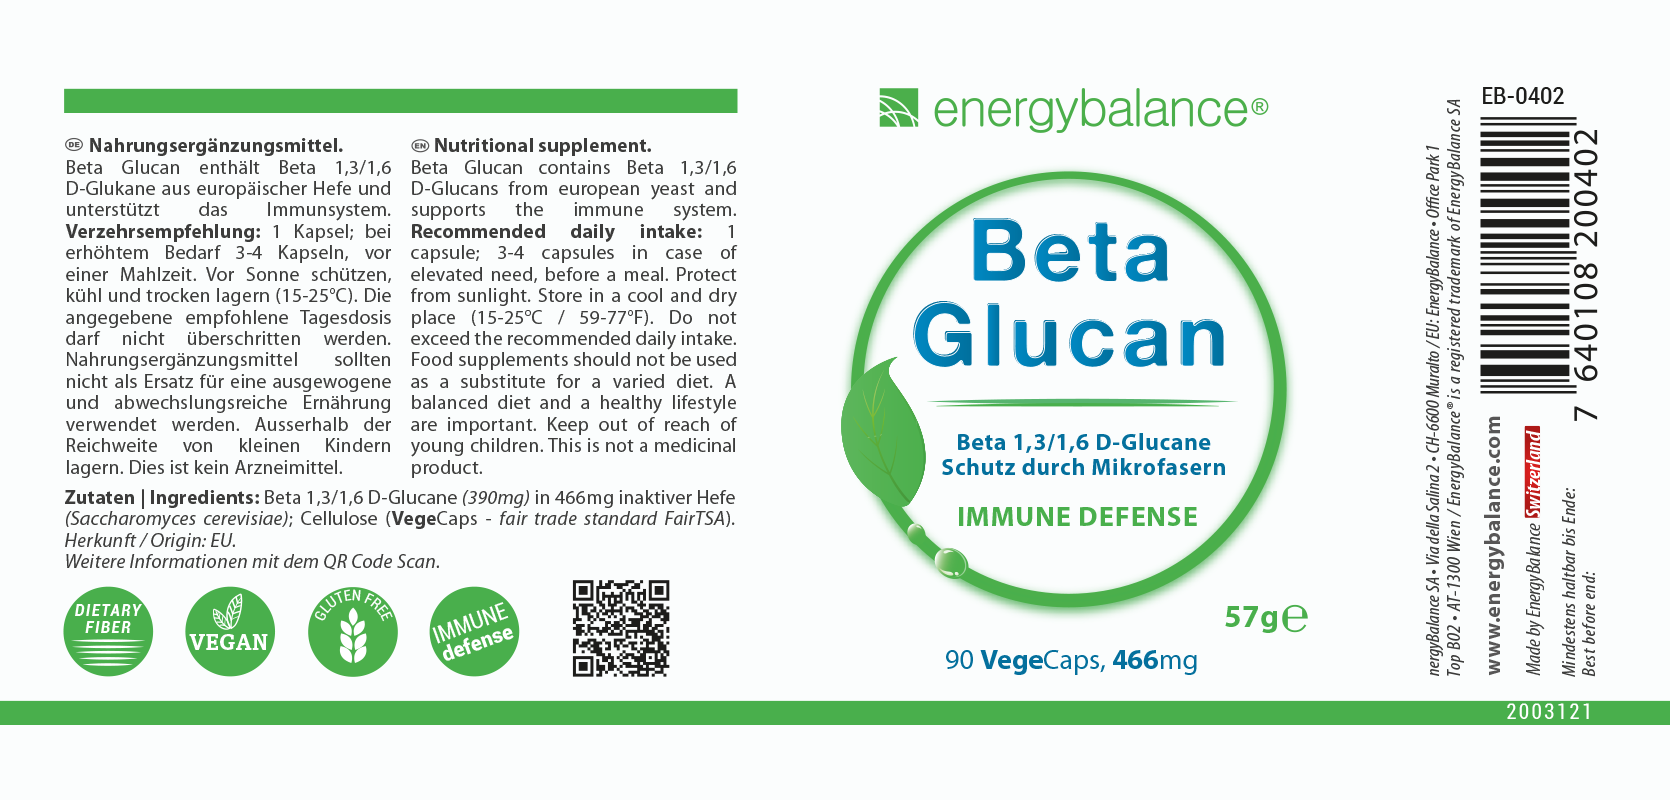 Beta Glucan Immun Etikett von Energybalance